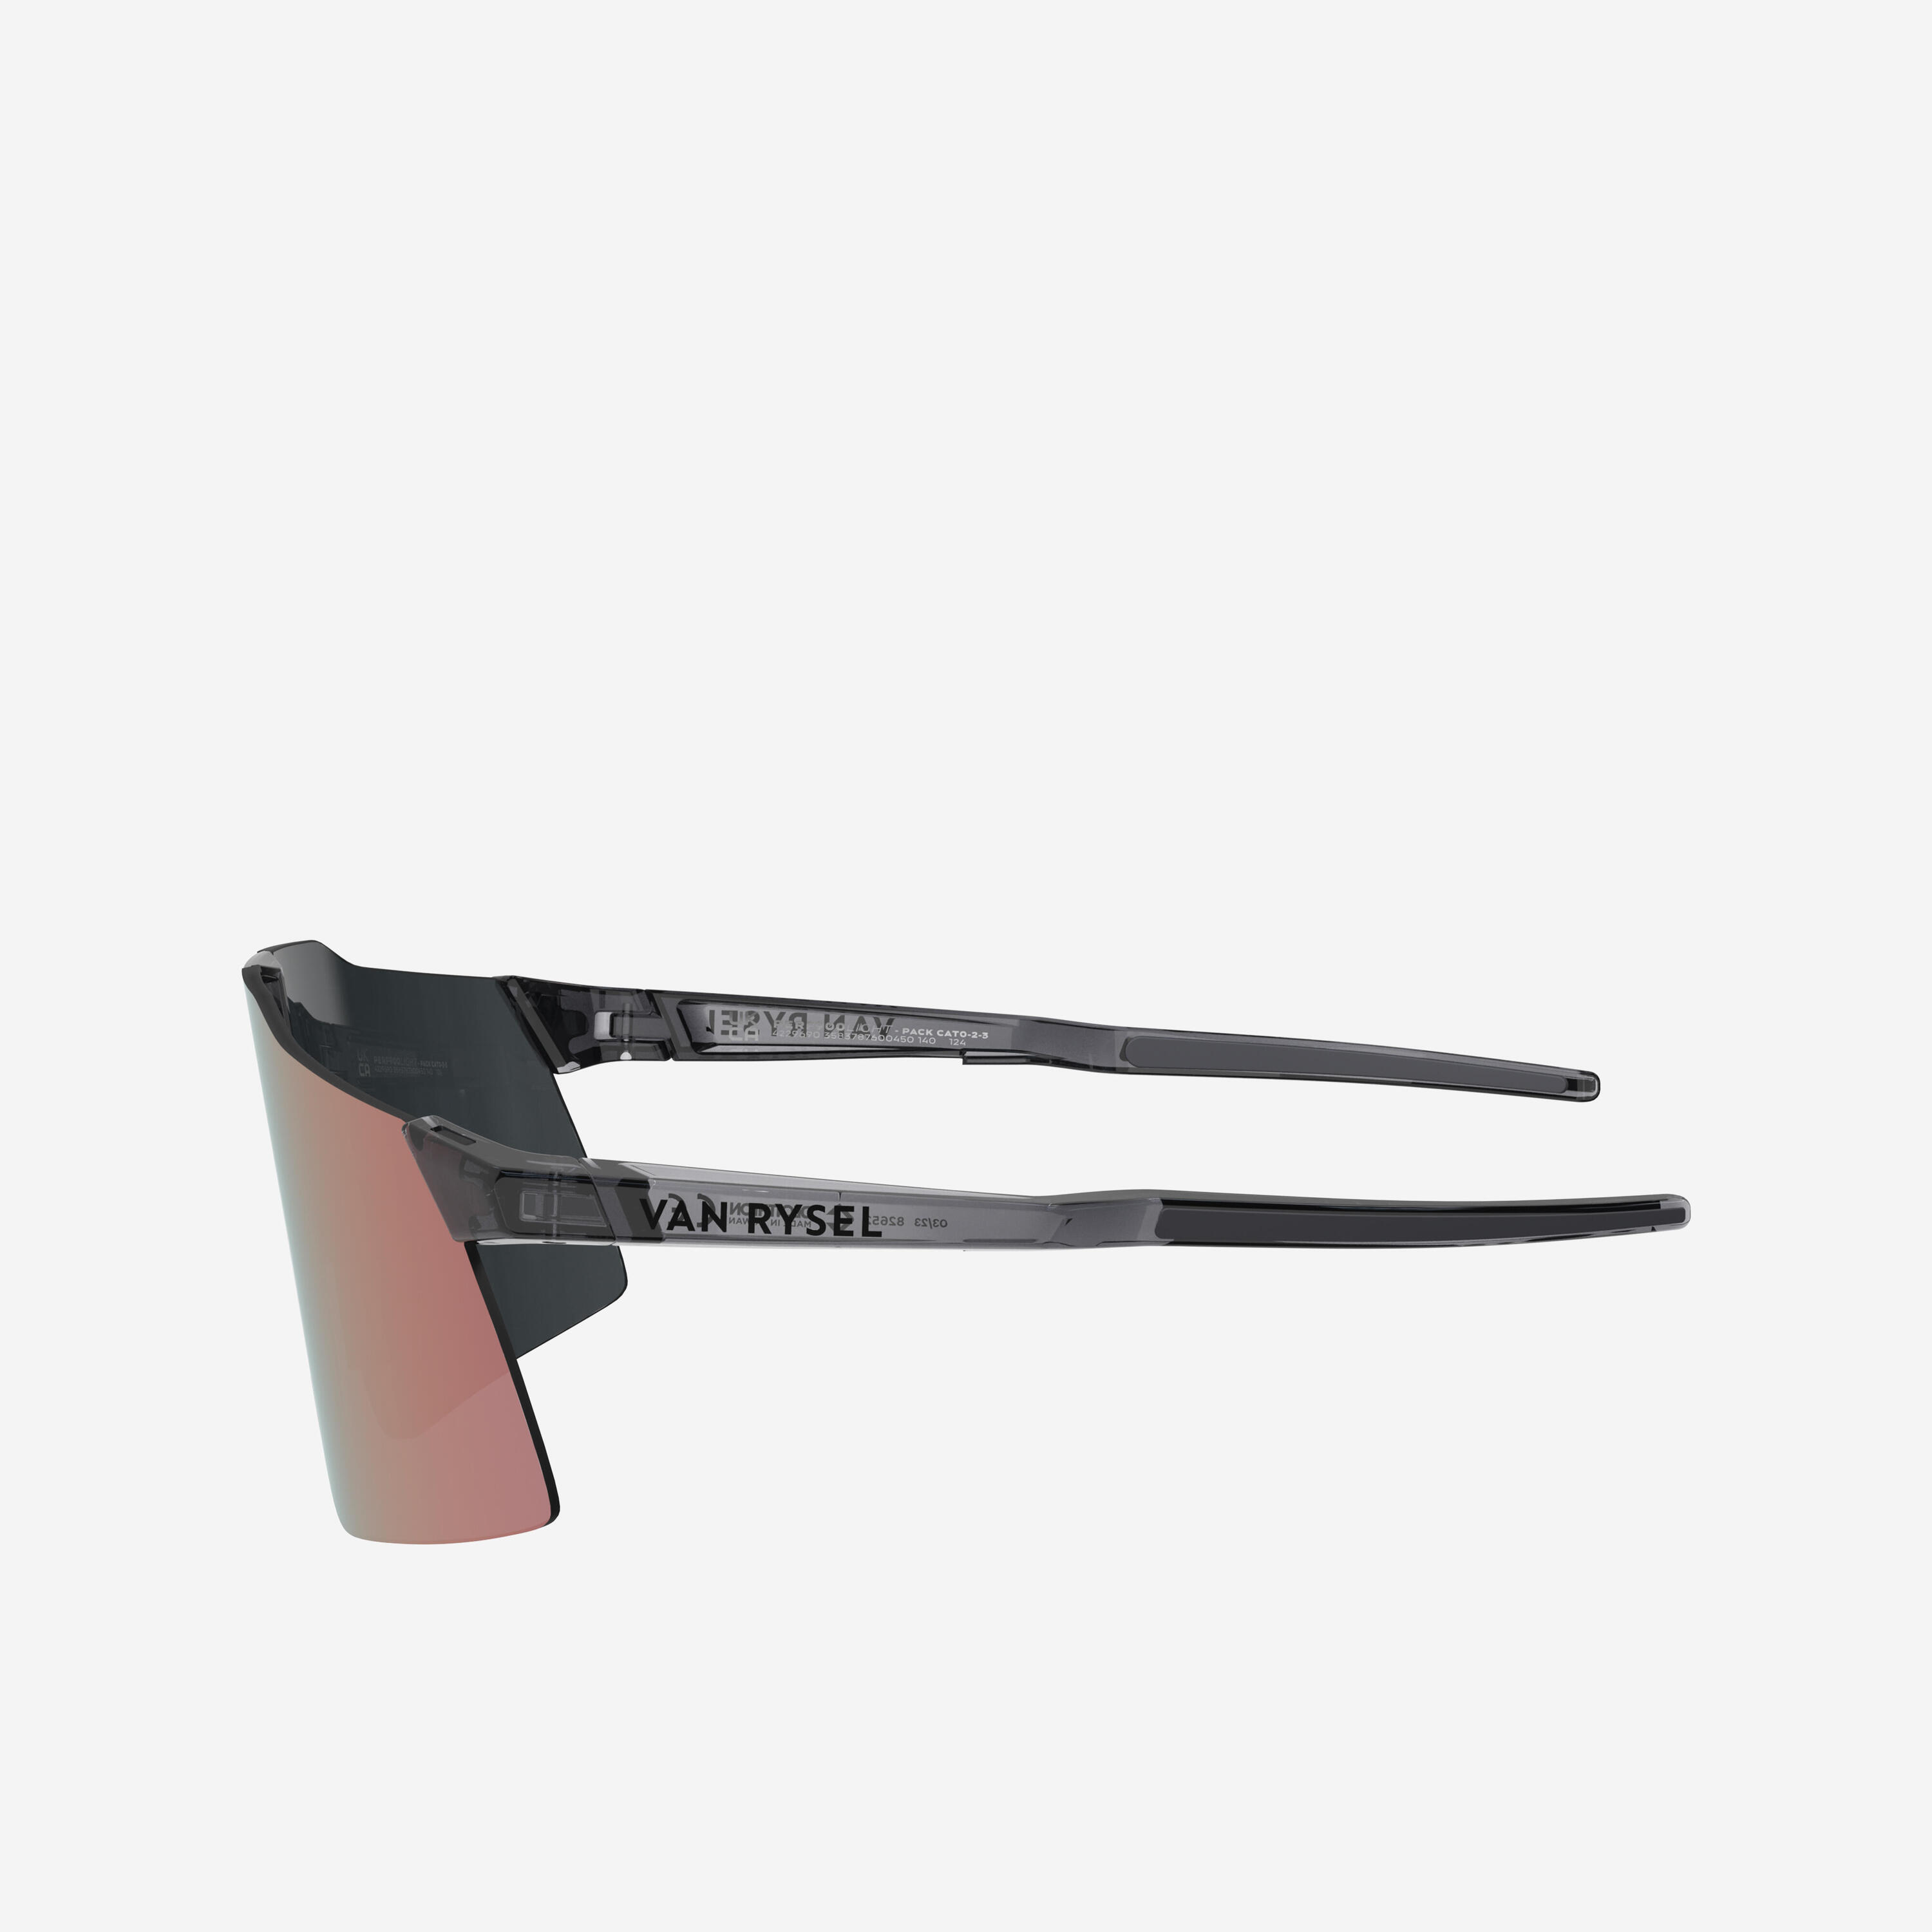 Cycling Cat 3 Sunglasses RoadR 900 Perf Light - Translucent Black 3/5